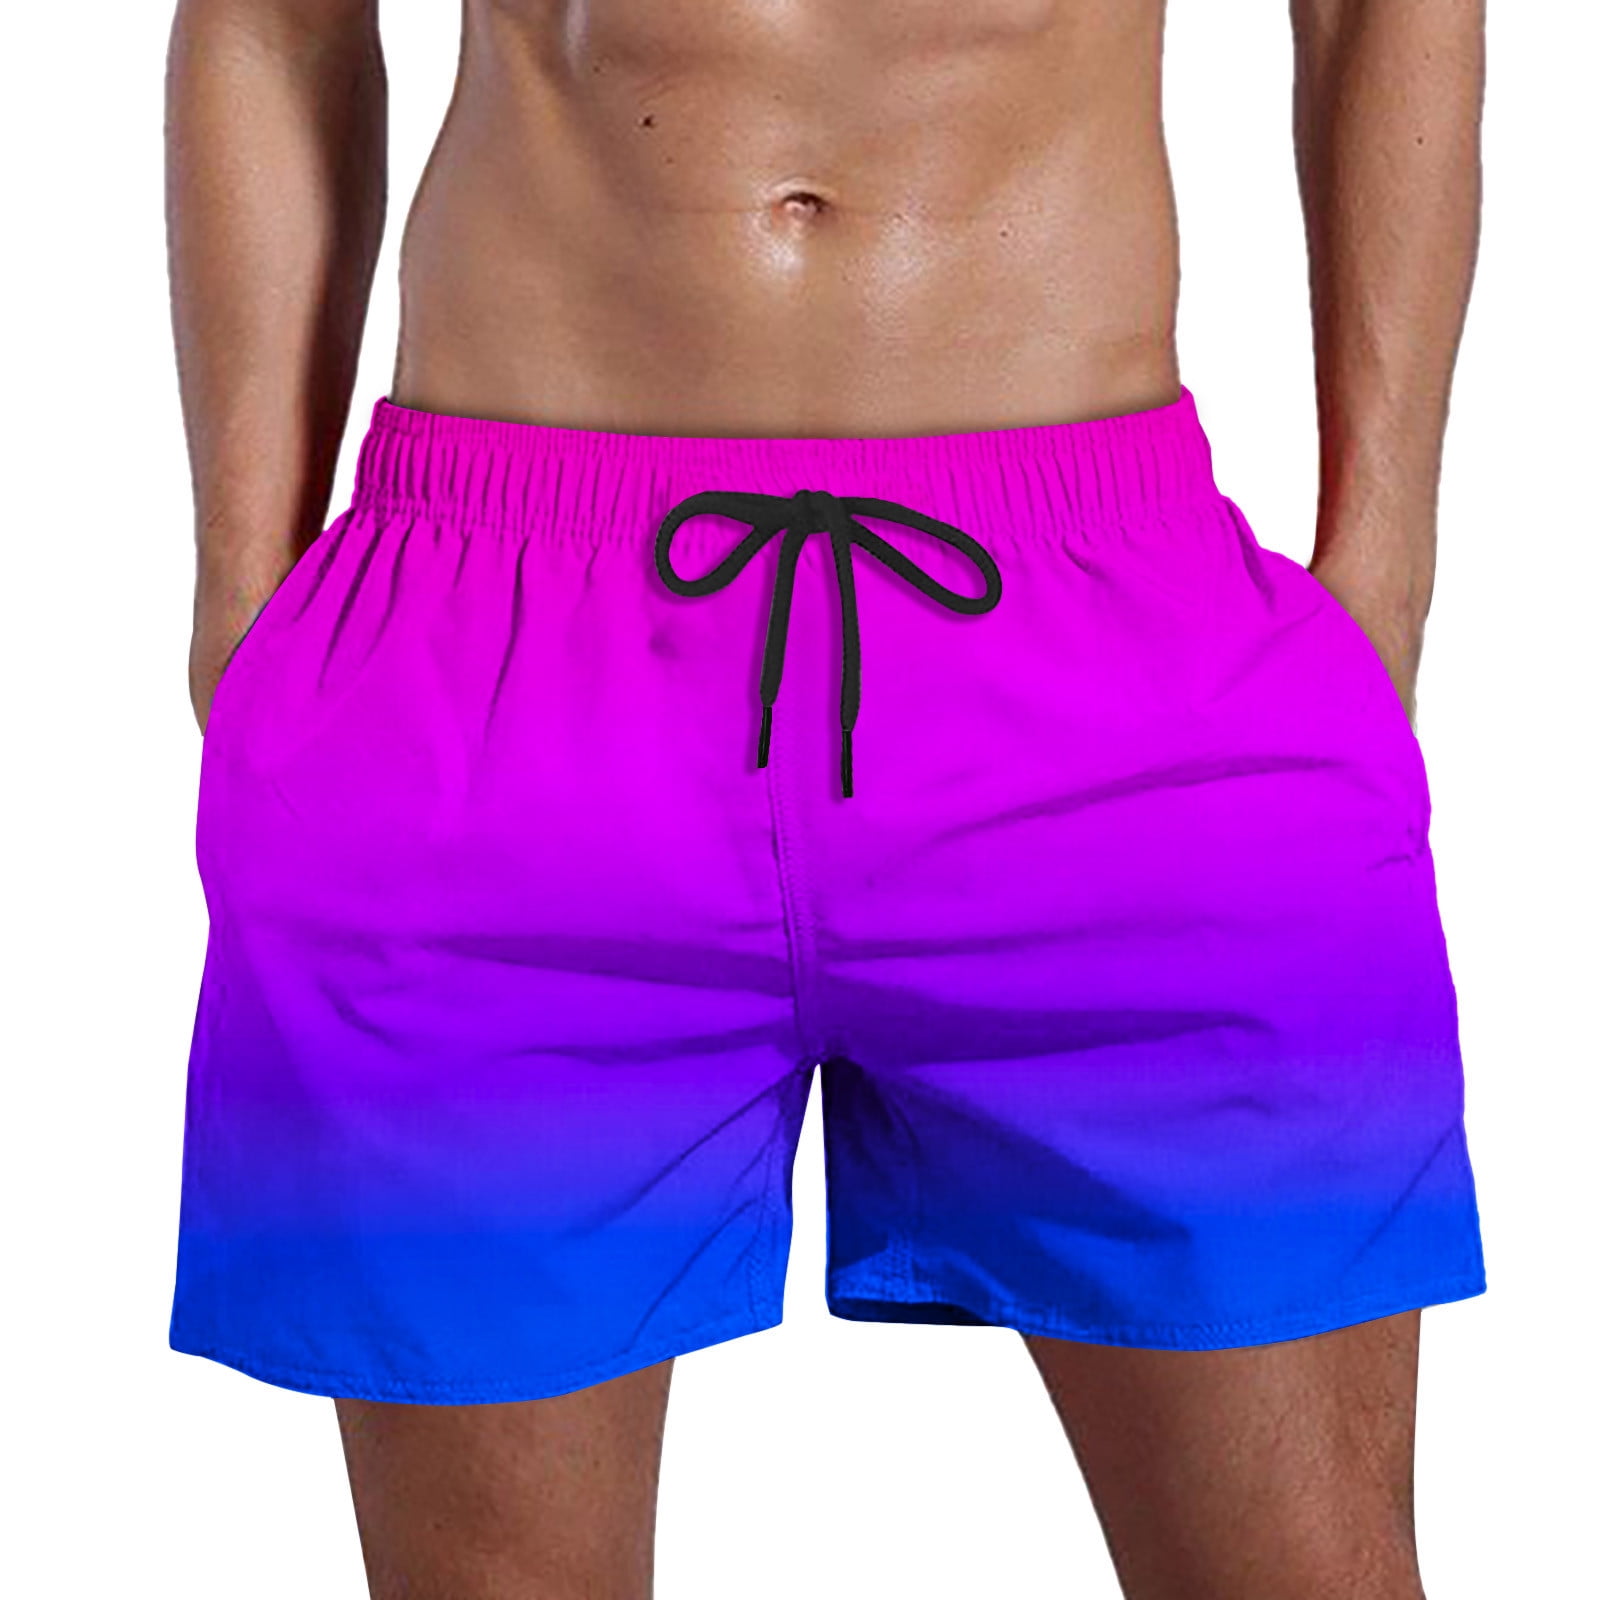 Men's Beach Shorts Quick Dry Waterproof Sports Shorts Bathing Suit Swim Trunks 